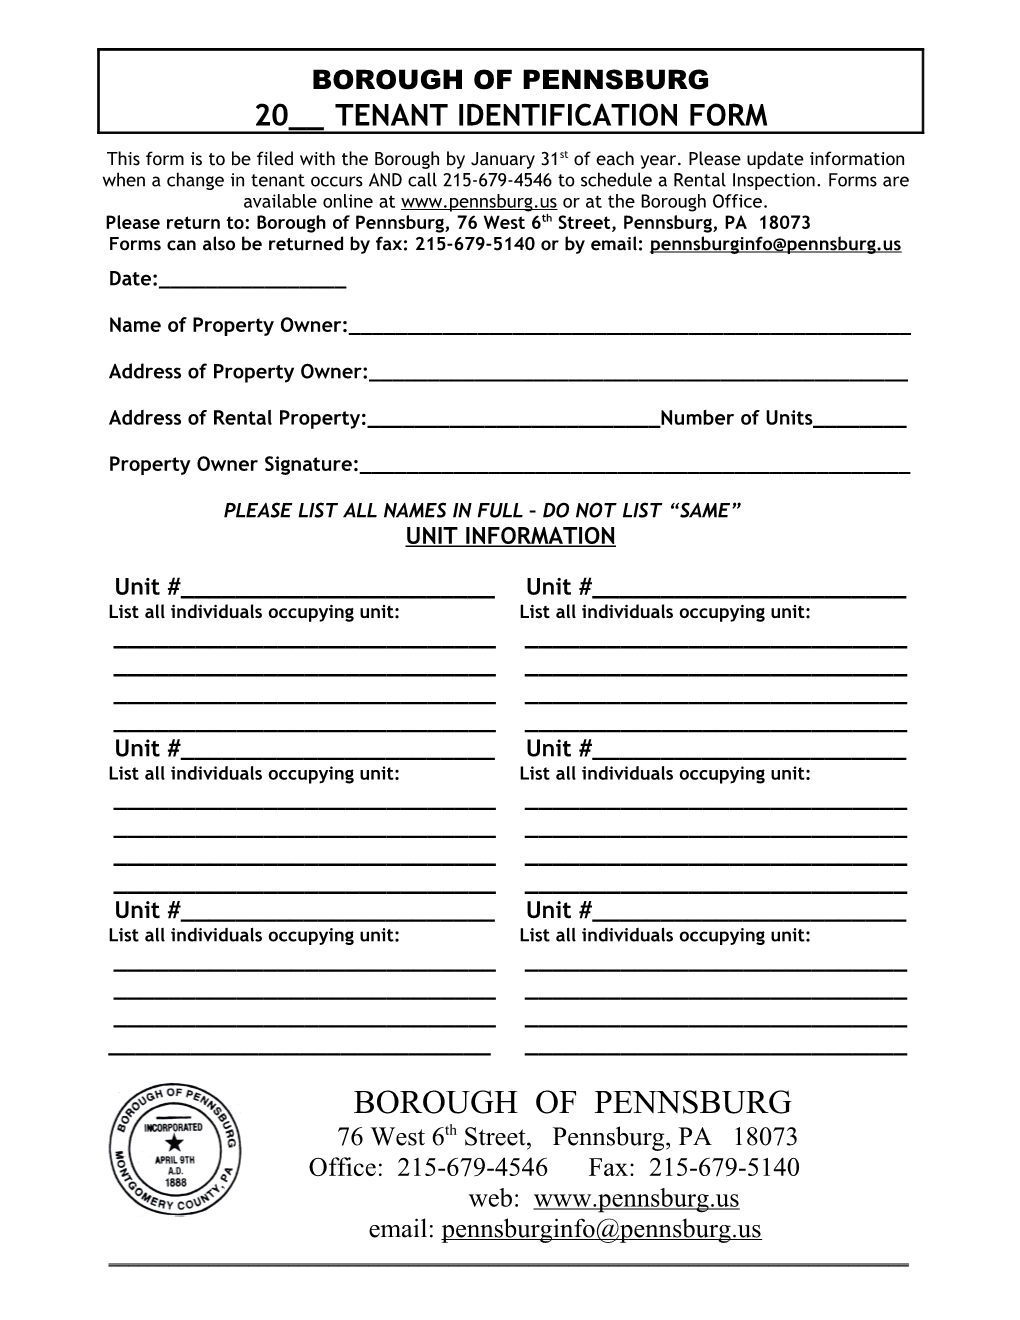 Please Return To: Borough of Pennsburg, 76 West 6Th Street, Pennsburg, PA 18073